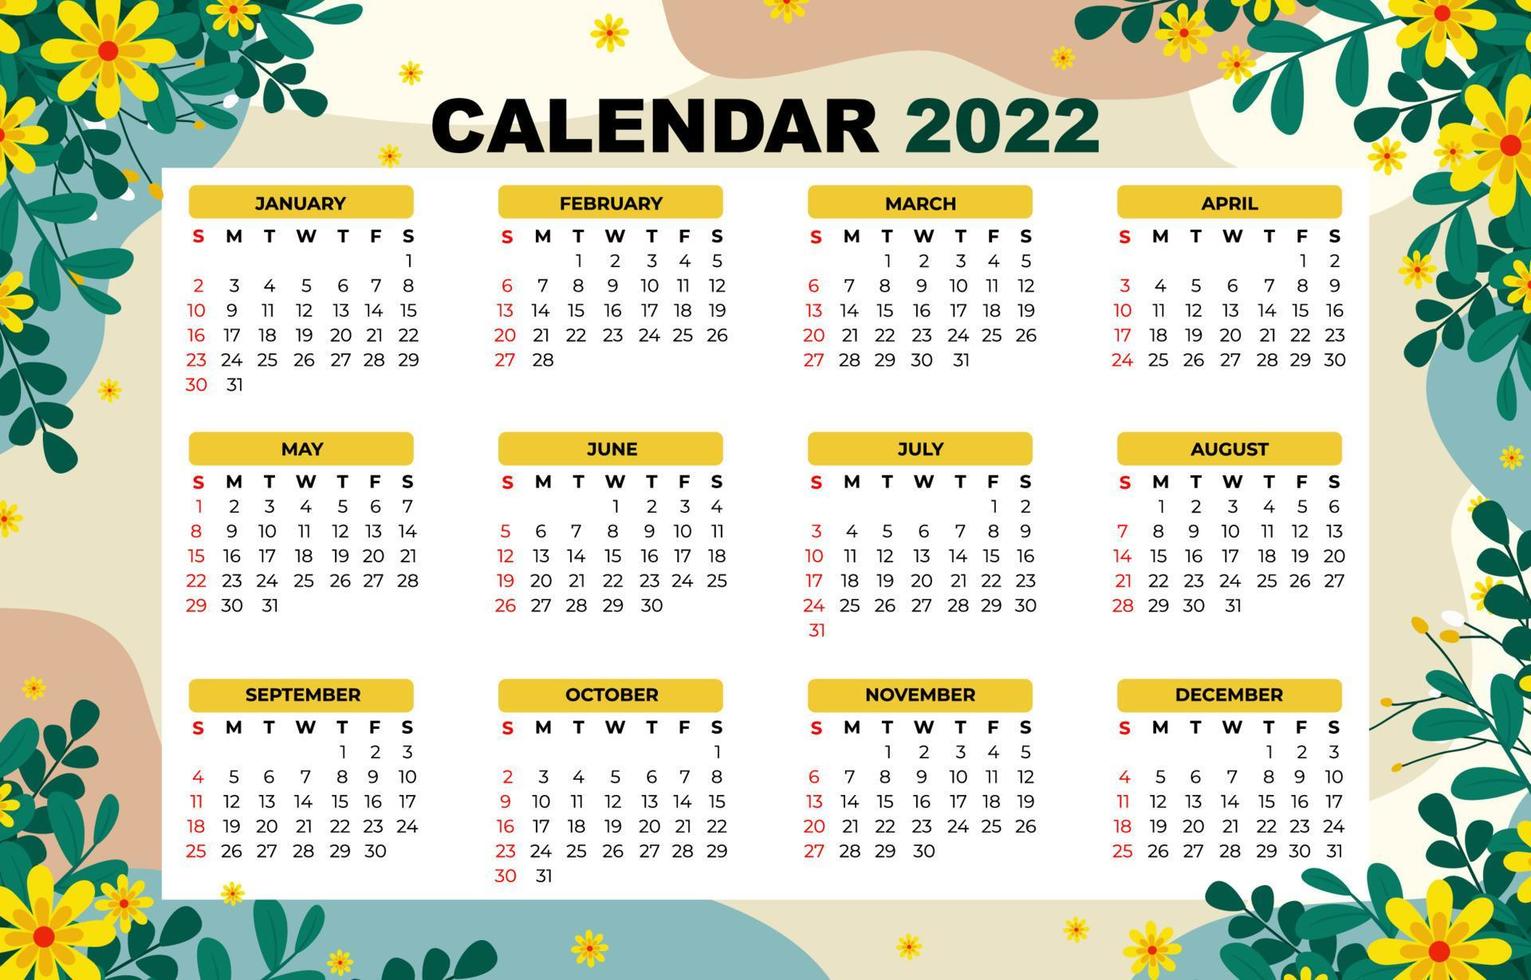 Calendar 2022 Floral Background Theme vector